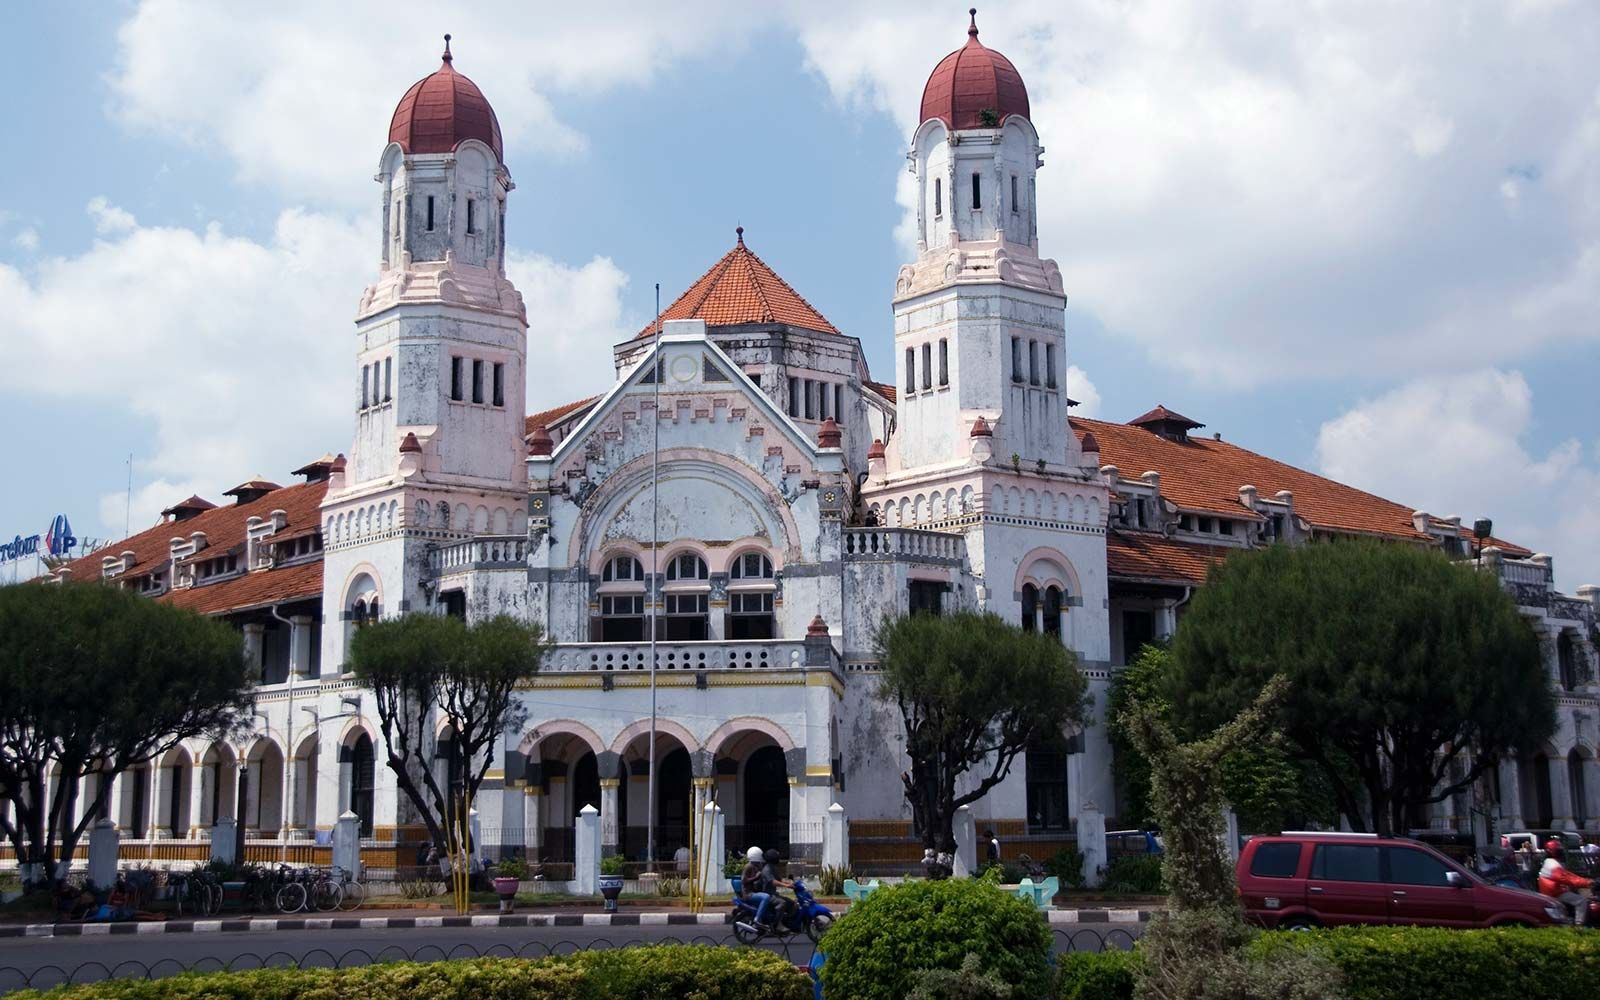 Wisata di Semarang Hanya Lawang Sewu? Ini Dia Wisata serta Kuliner yang Ada di Kota Semarang